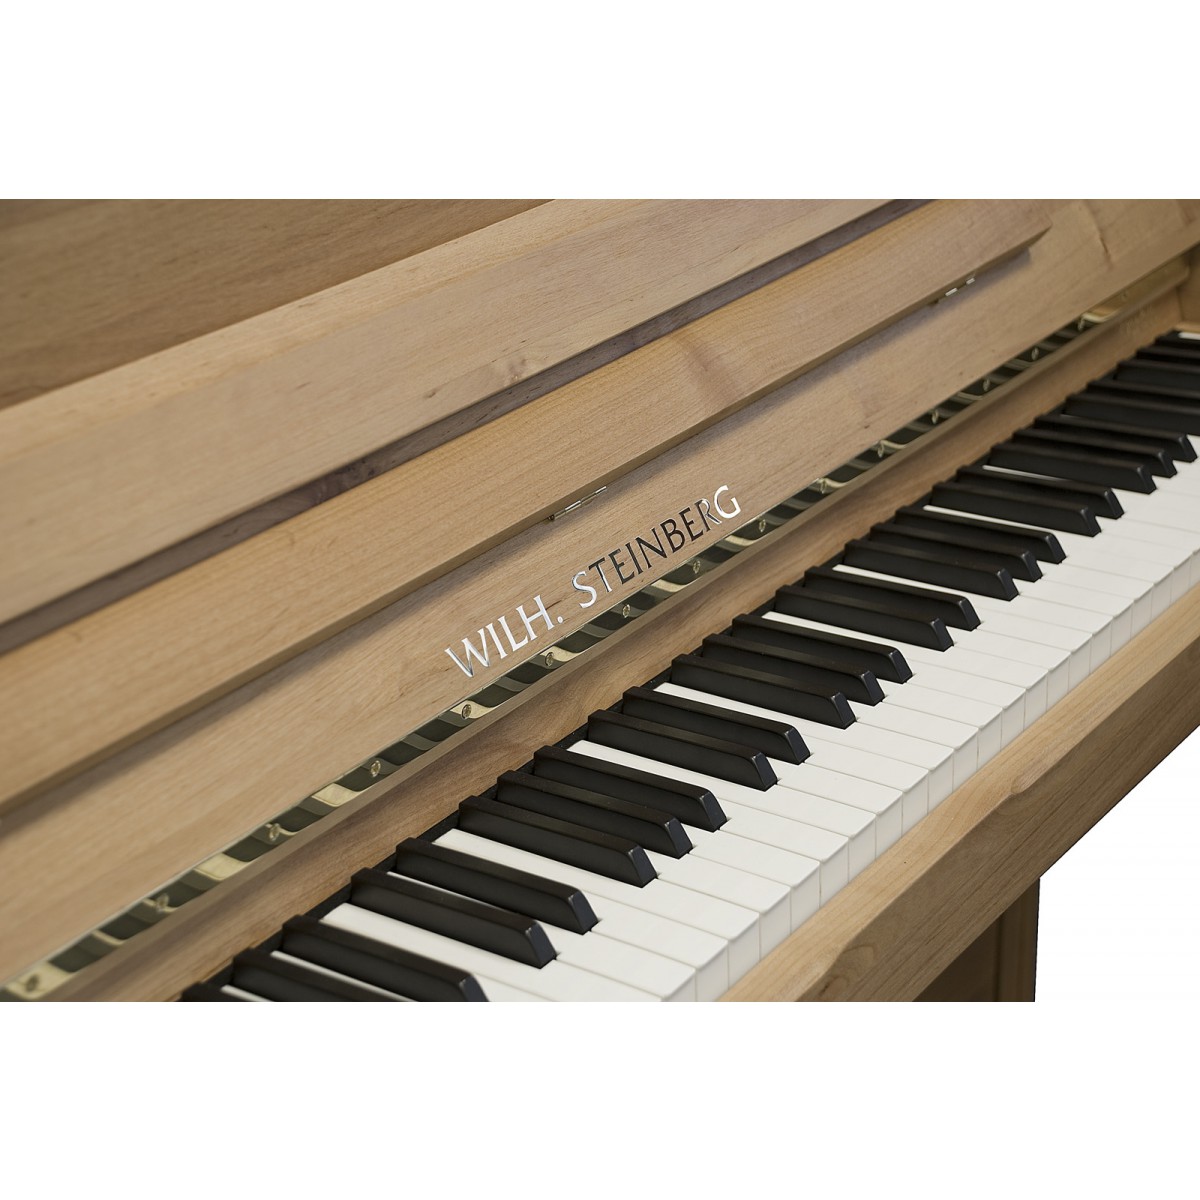 Wilhelm Steinberg S117 Klavier Tastatur